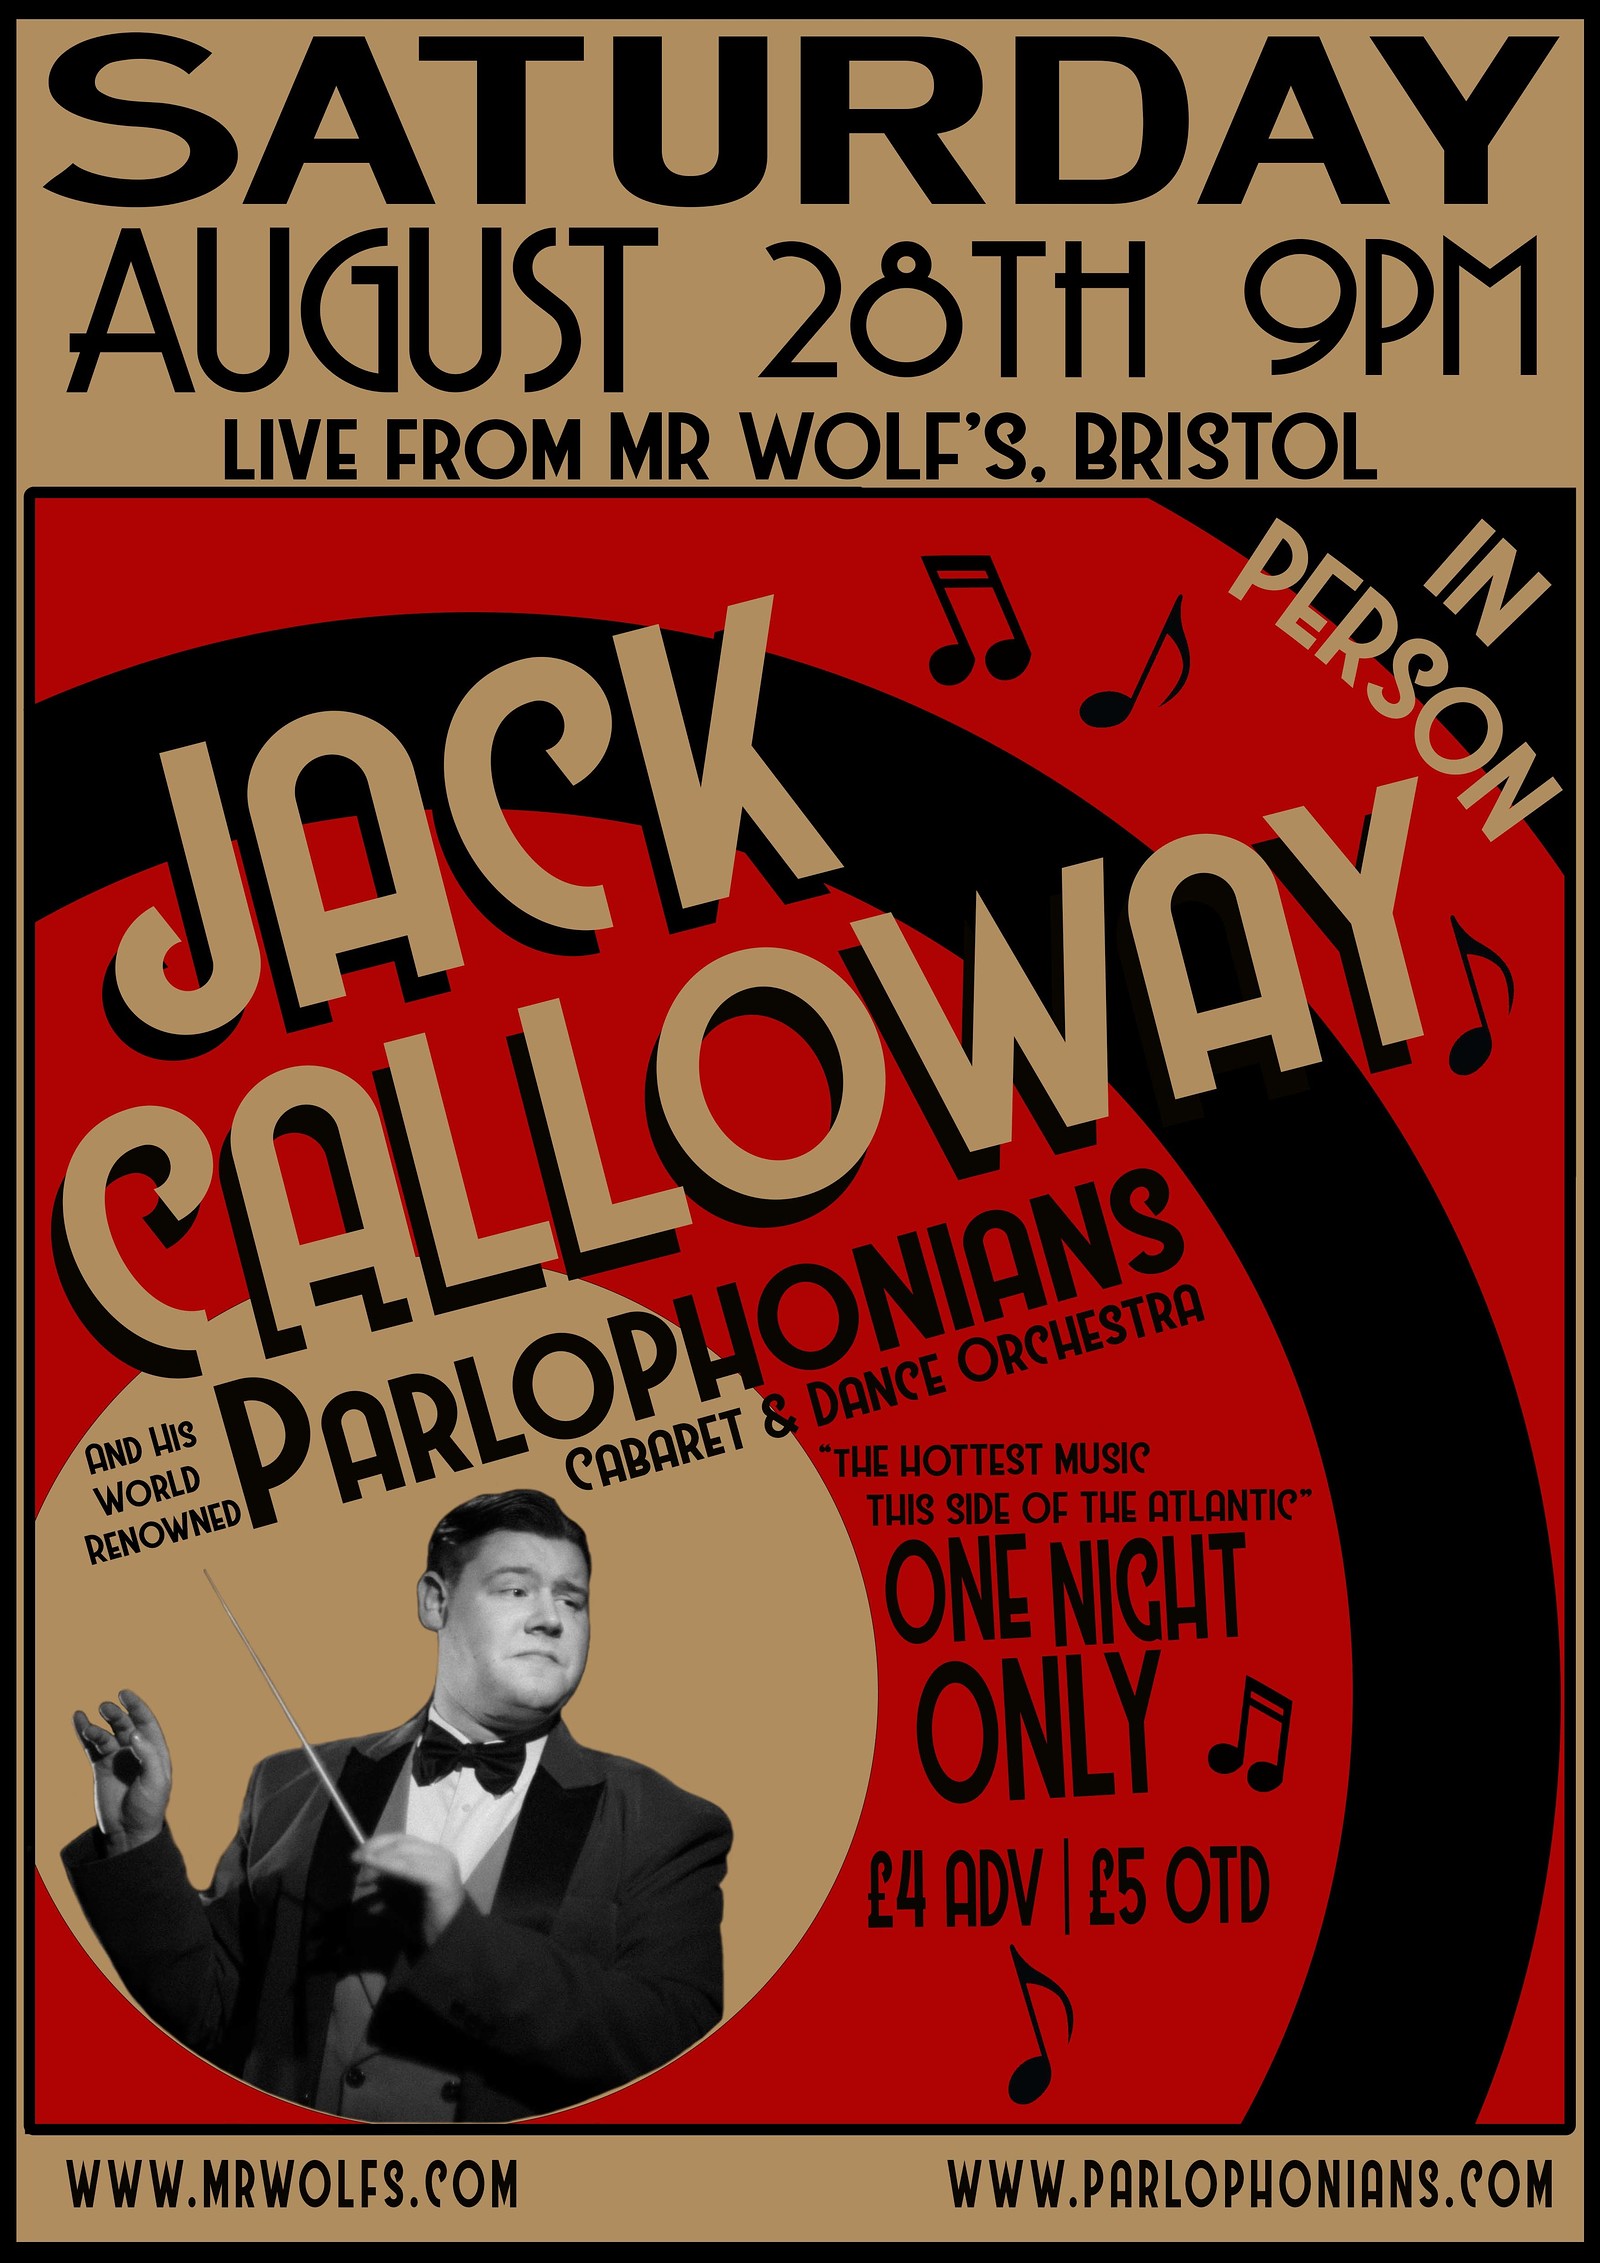 Jack Calloway & His Parlophonians at Mr Wolfs